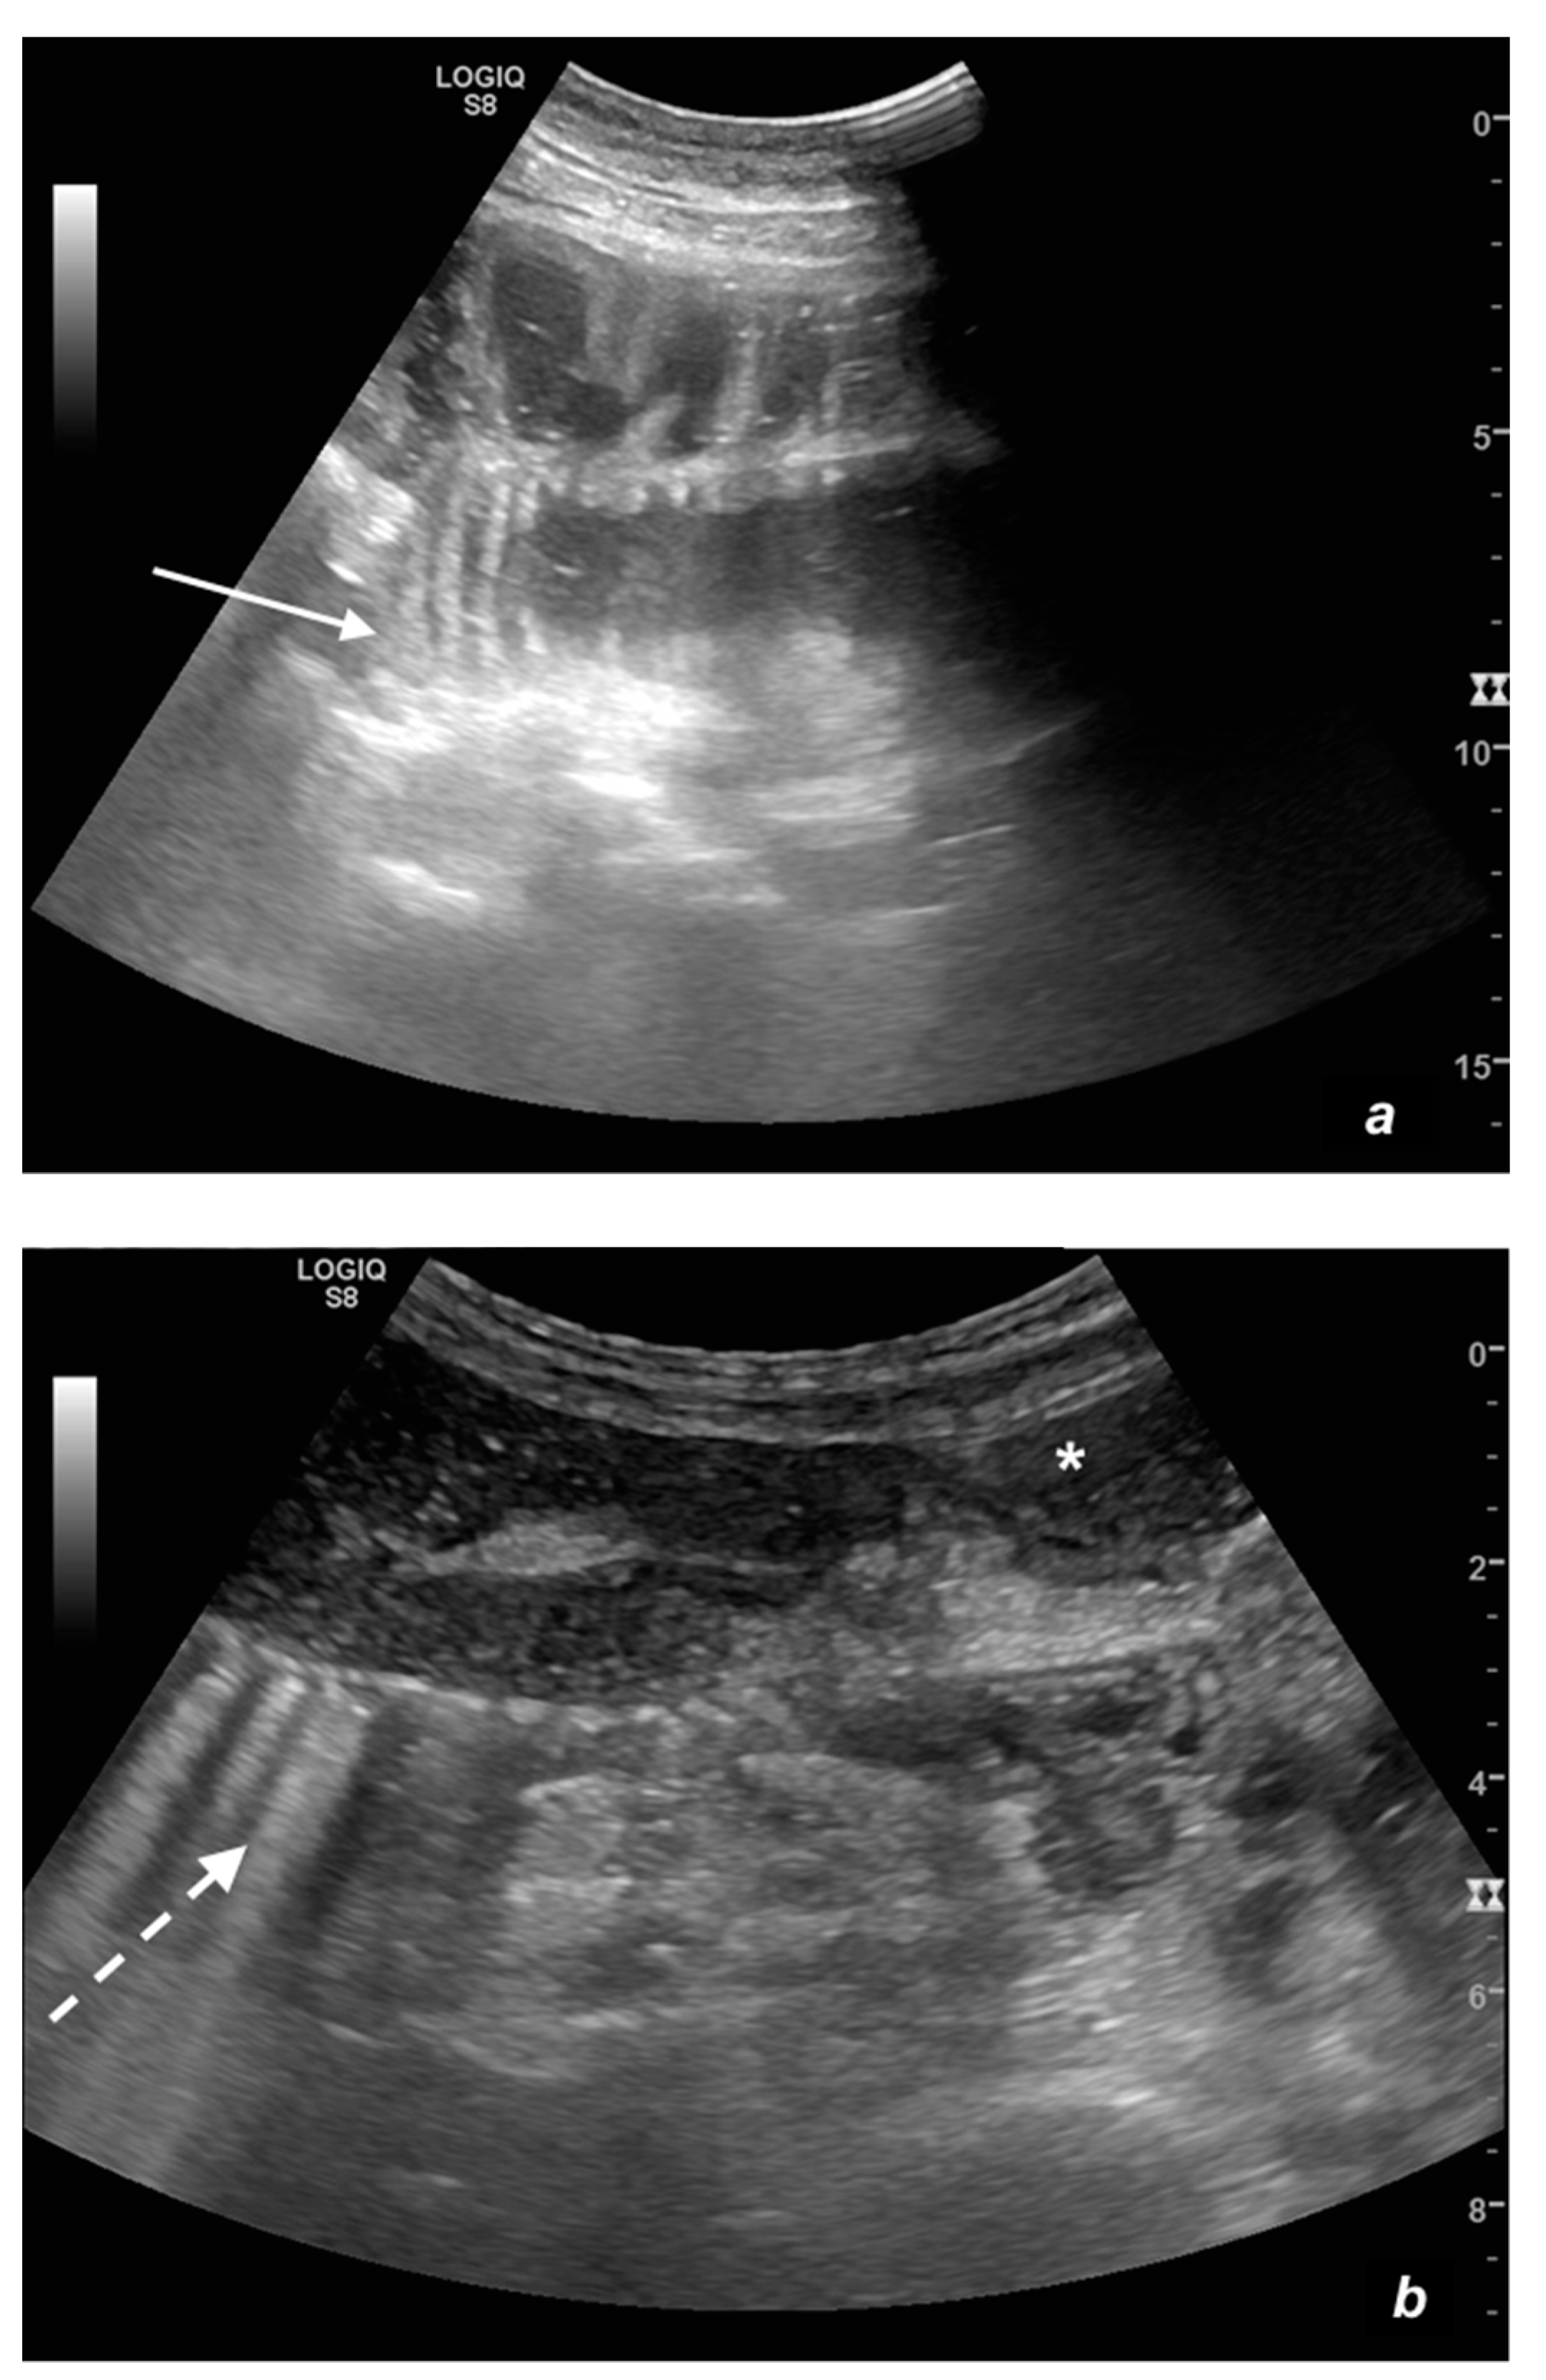 Diagnostics Free Full Text Ultrasound Of Small Bowel Obstruction A